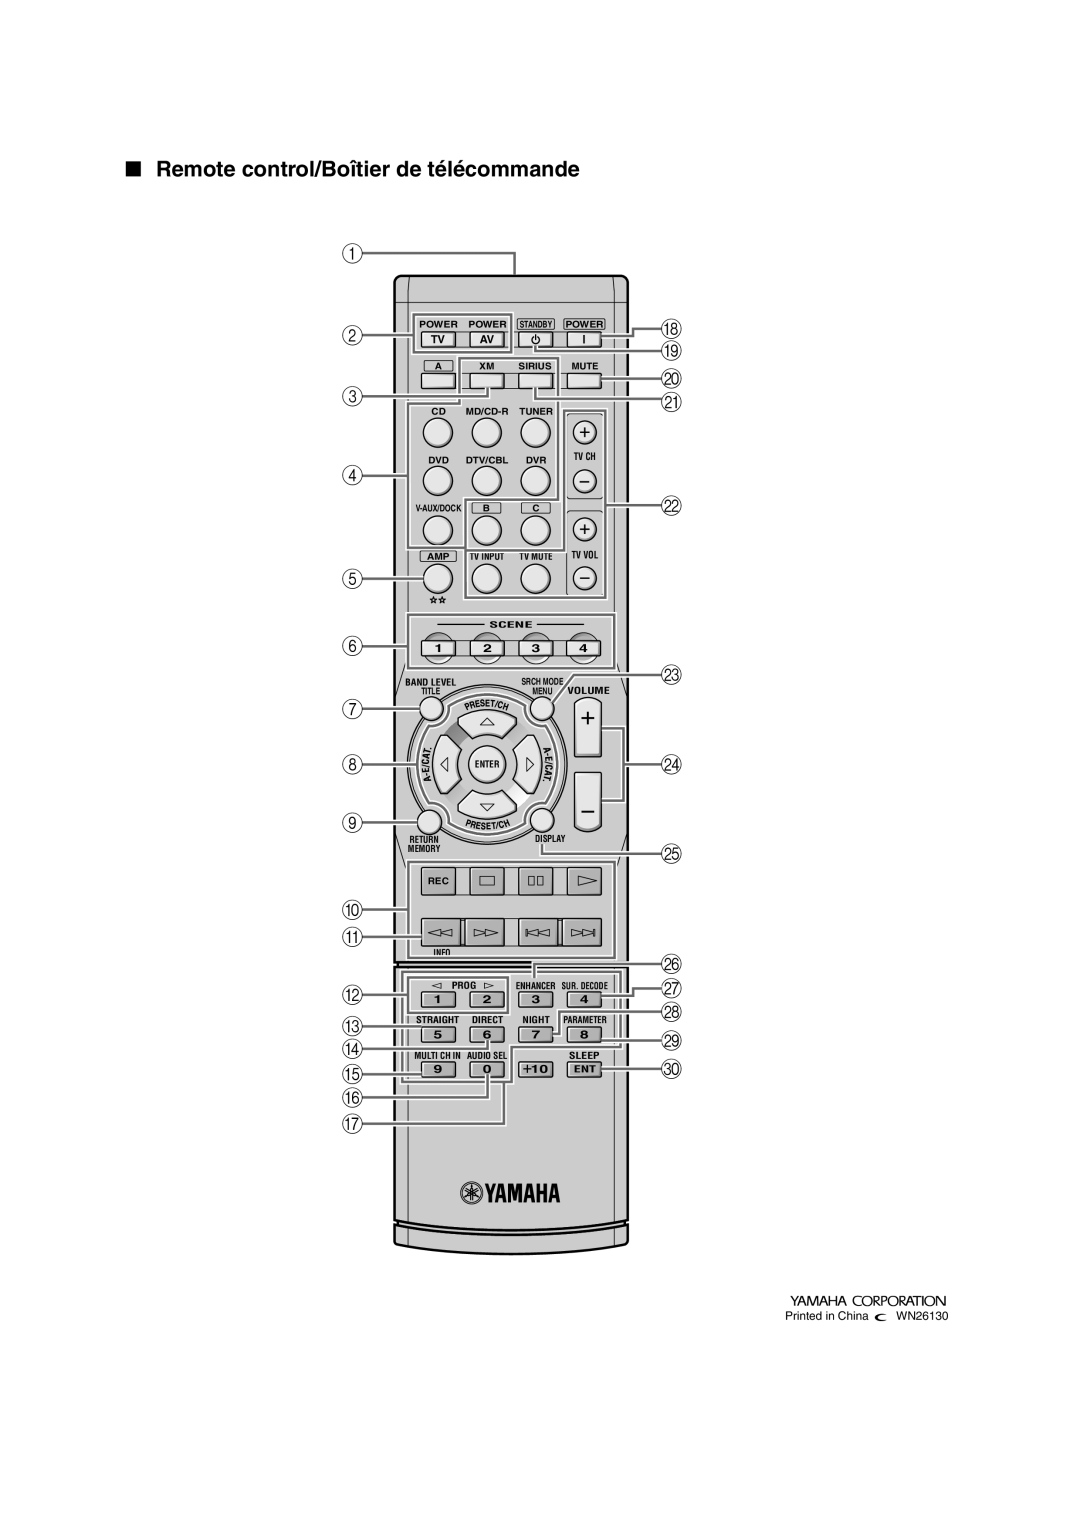 Yamaha RX-V563 owner manual Remote control/Boîtier de télécommande, Printed in China WN26130 